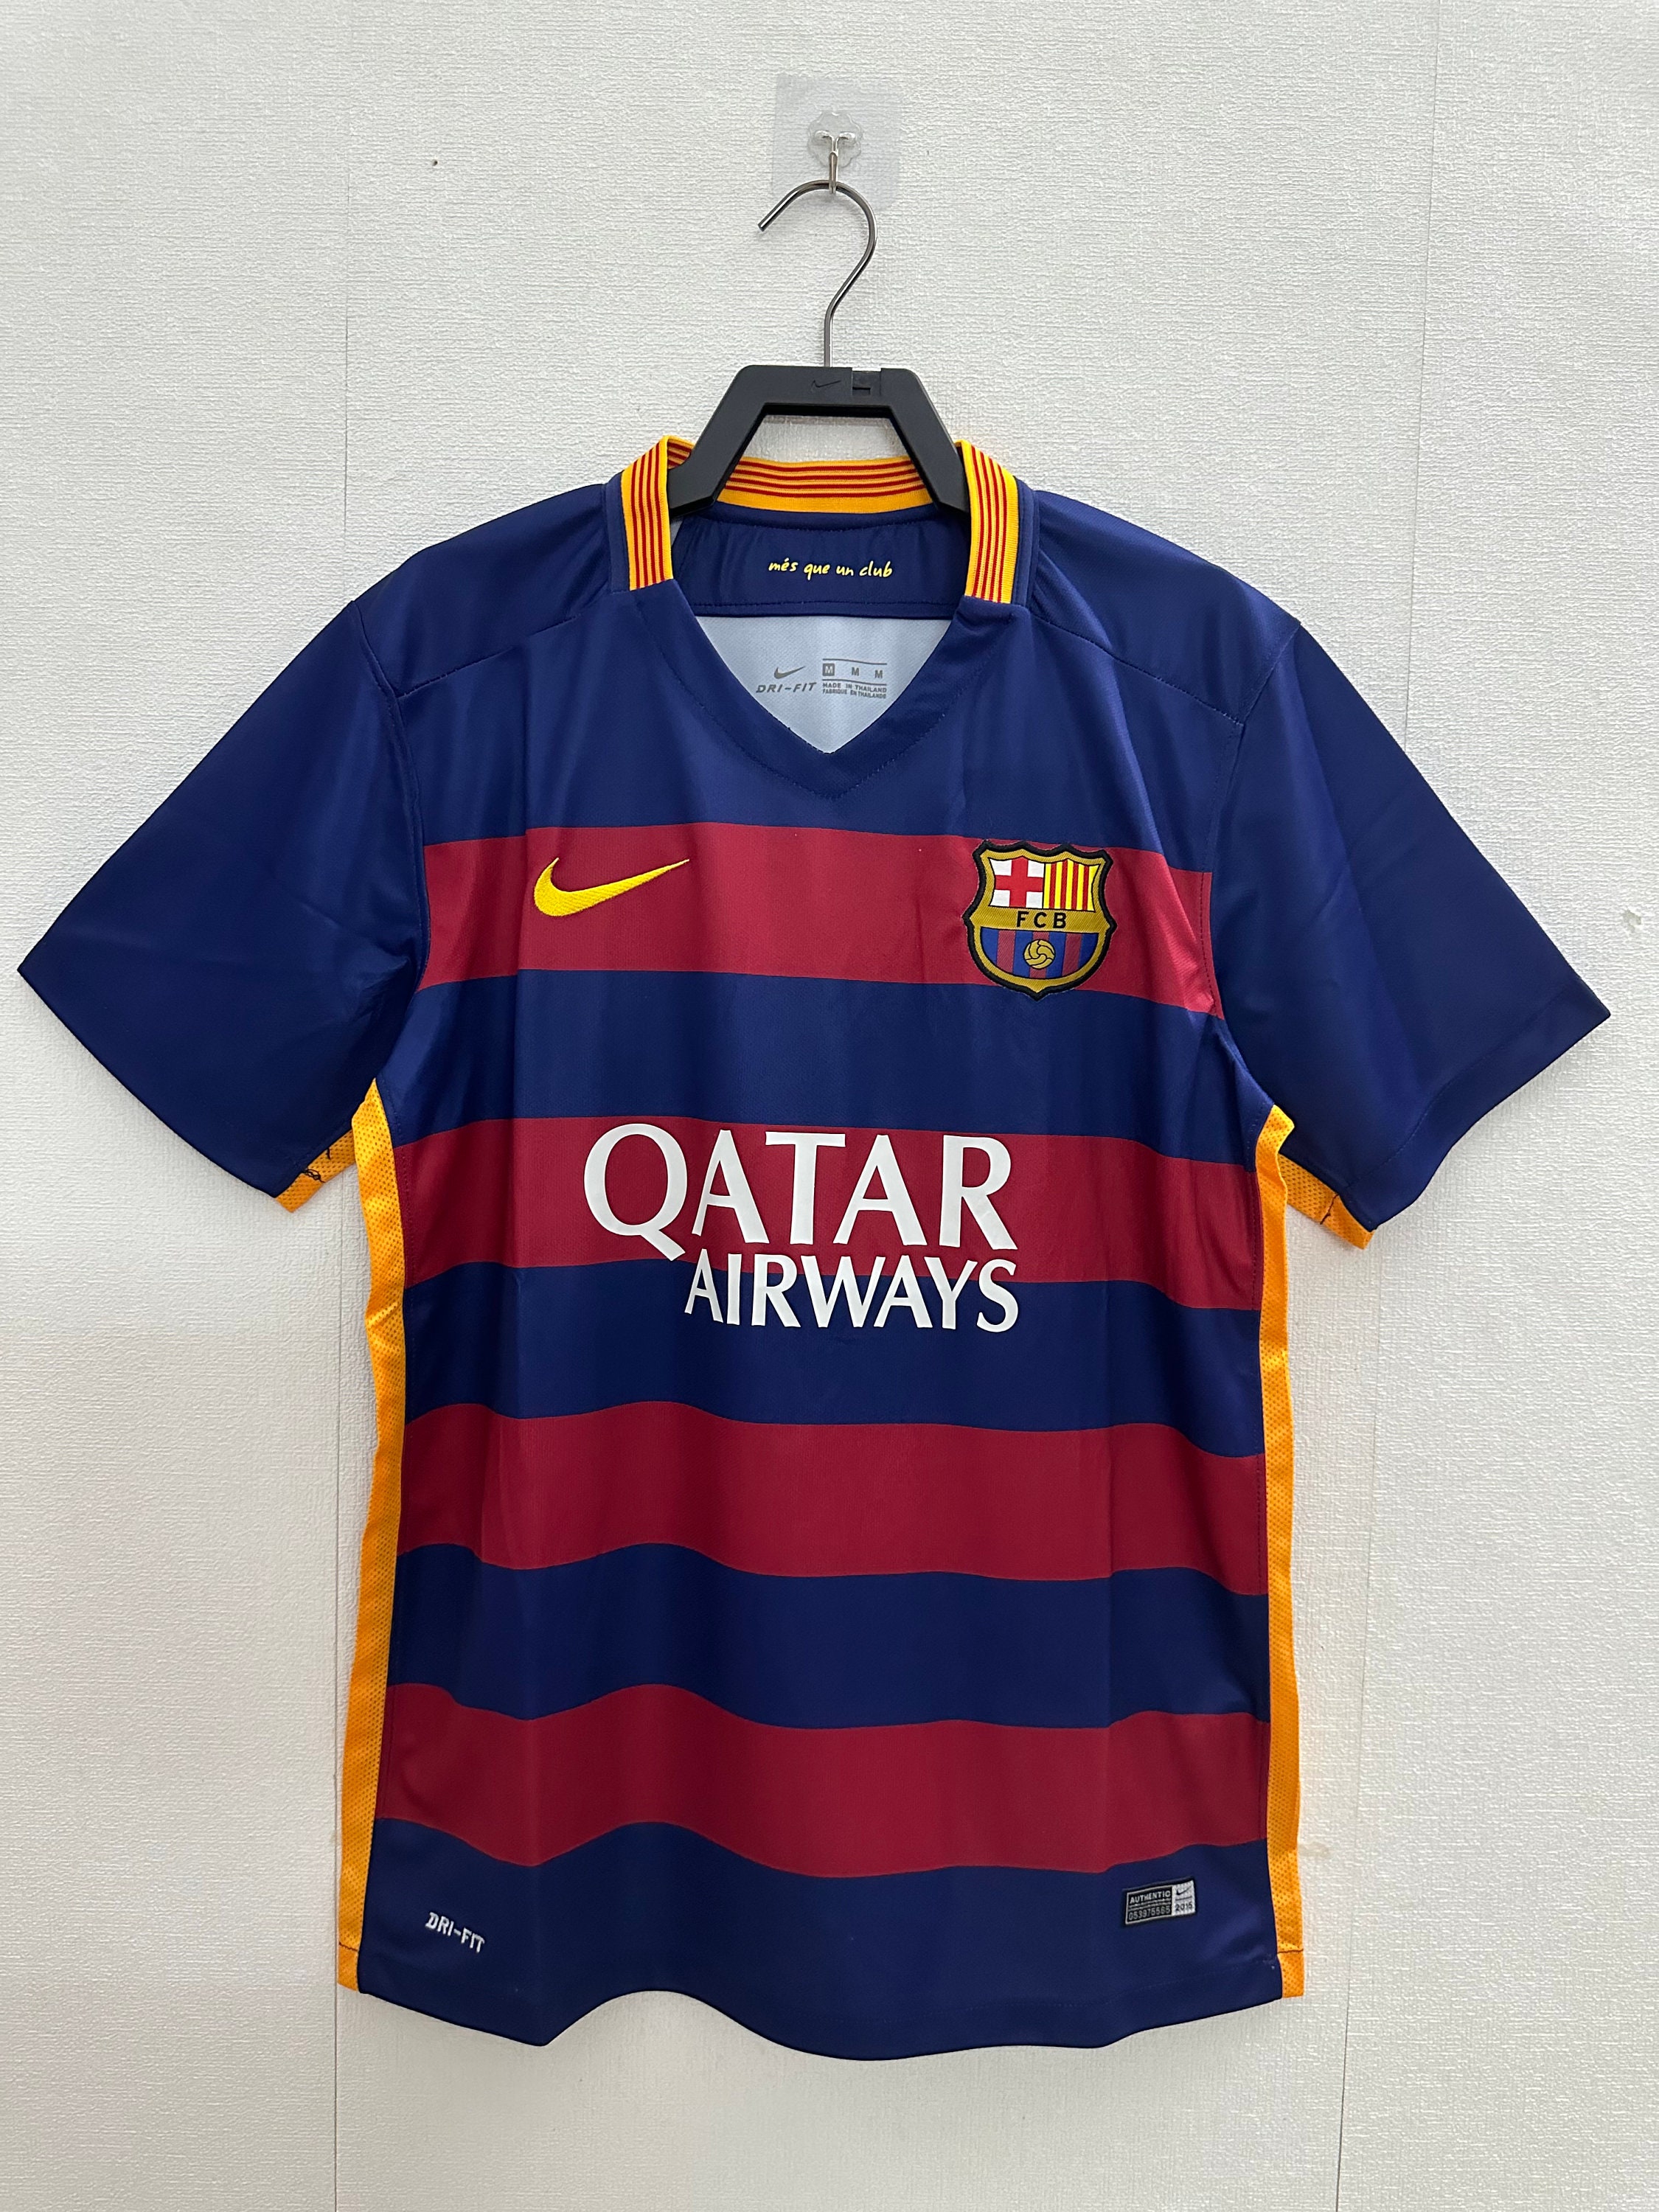 2020-21 Barcelona Fourth S/S No.10 Messi LA LIGA 20-21 jersey shirt BNWT FCB